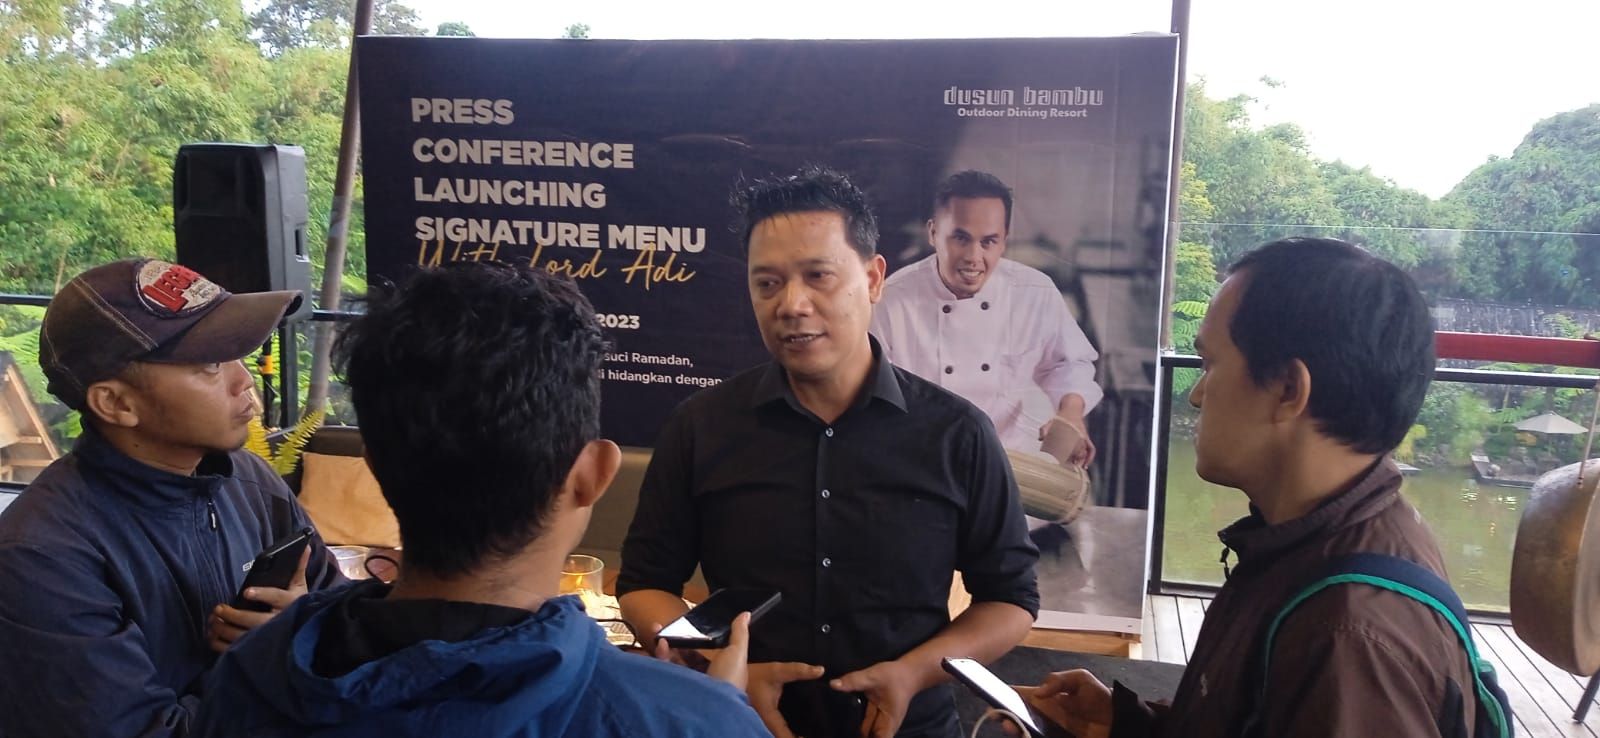 Director of Food & Beverage Dusun Bambu Devroni Setiawan 